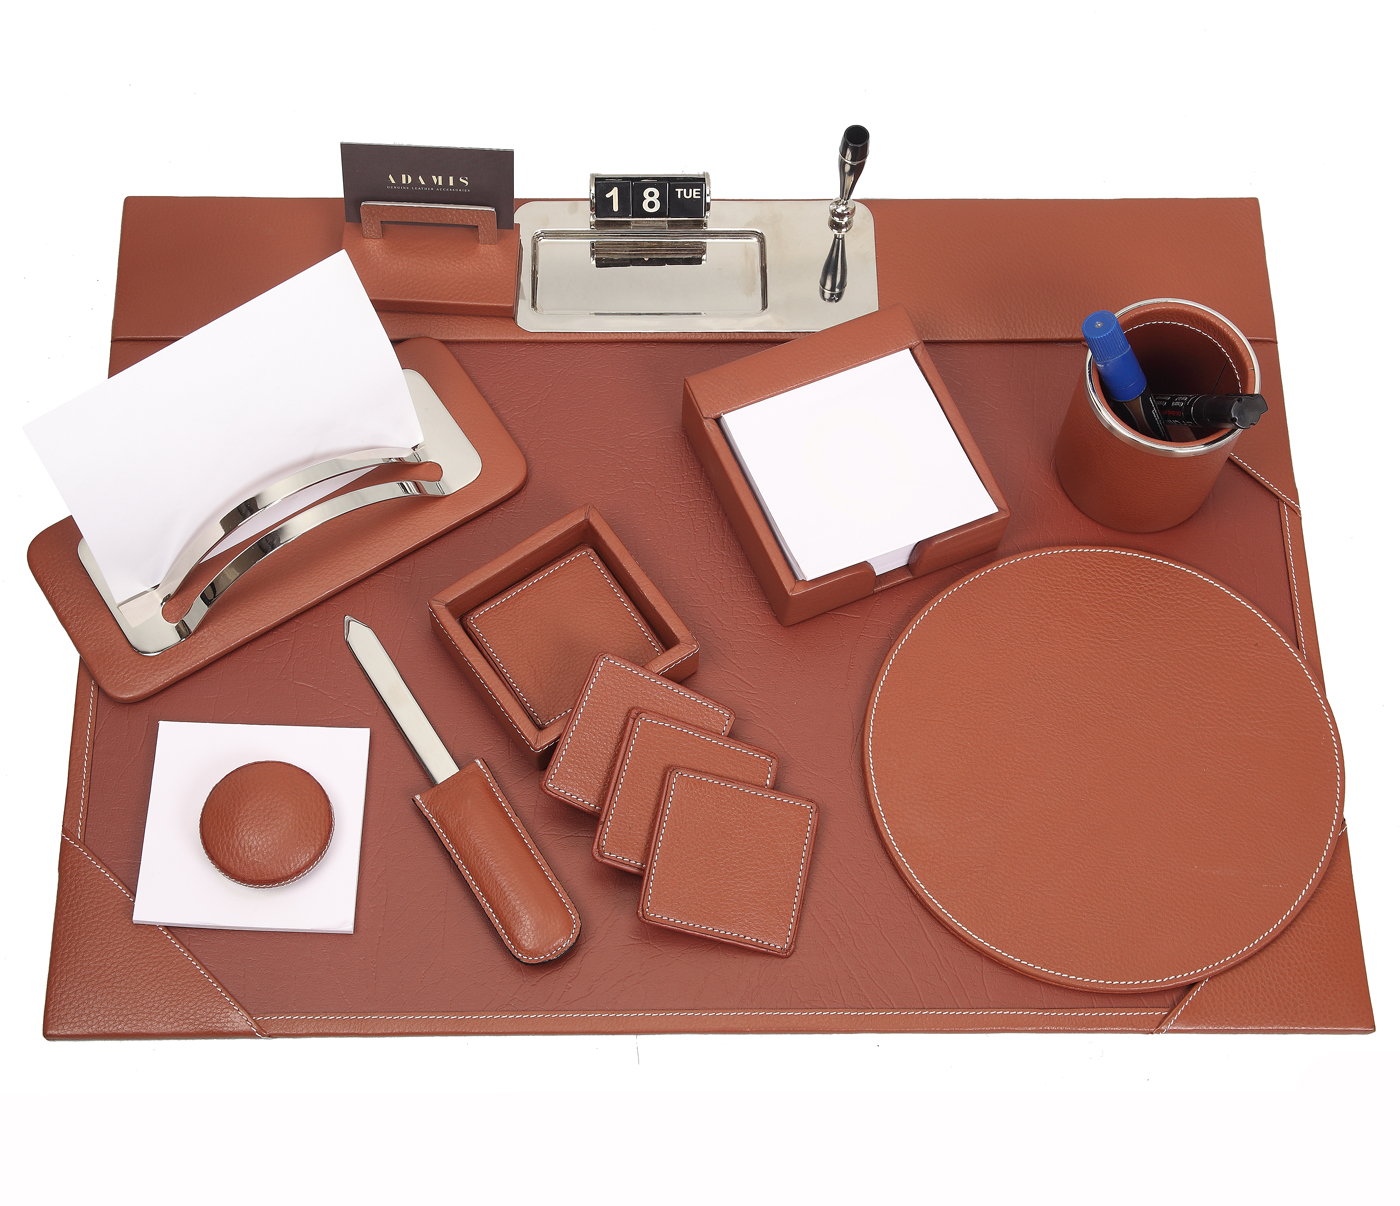 DSK1--8pcs office desk set organizer in Genuine Leather - Tan